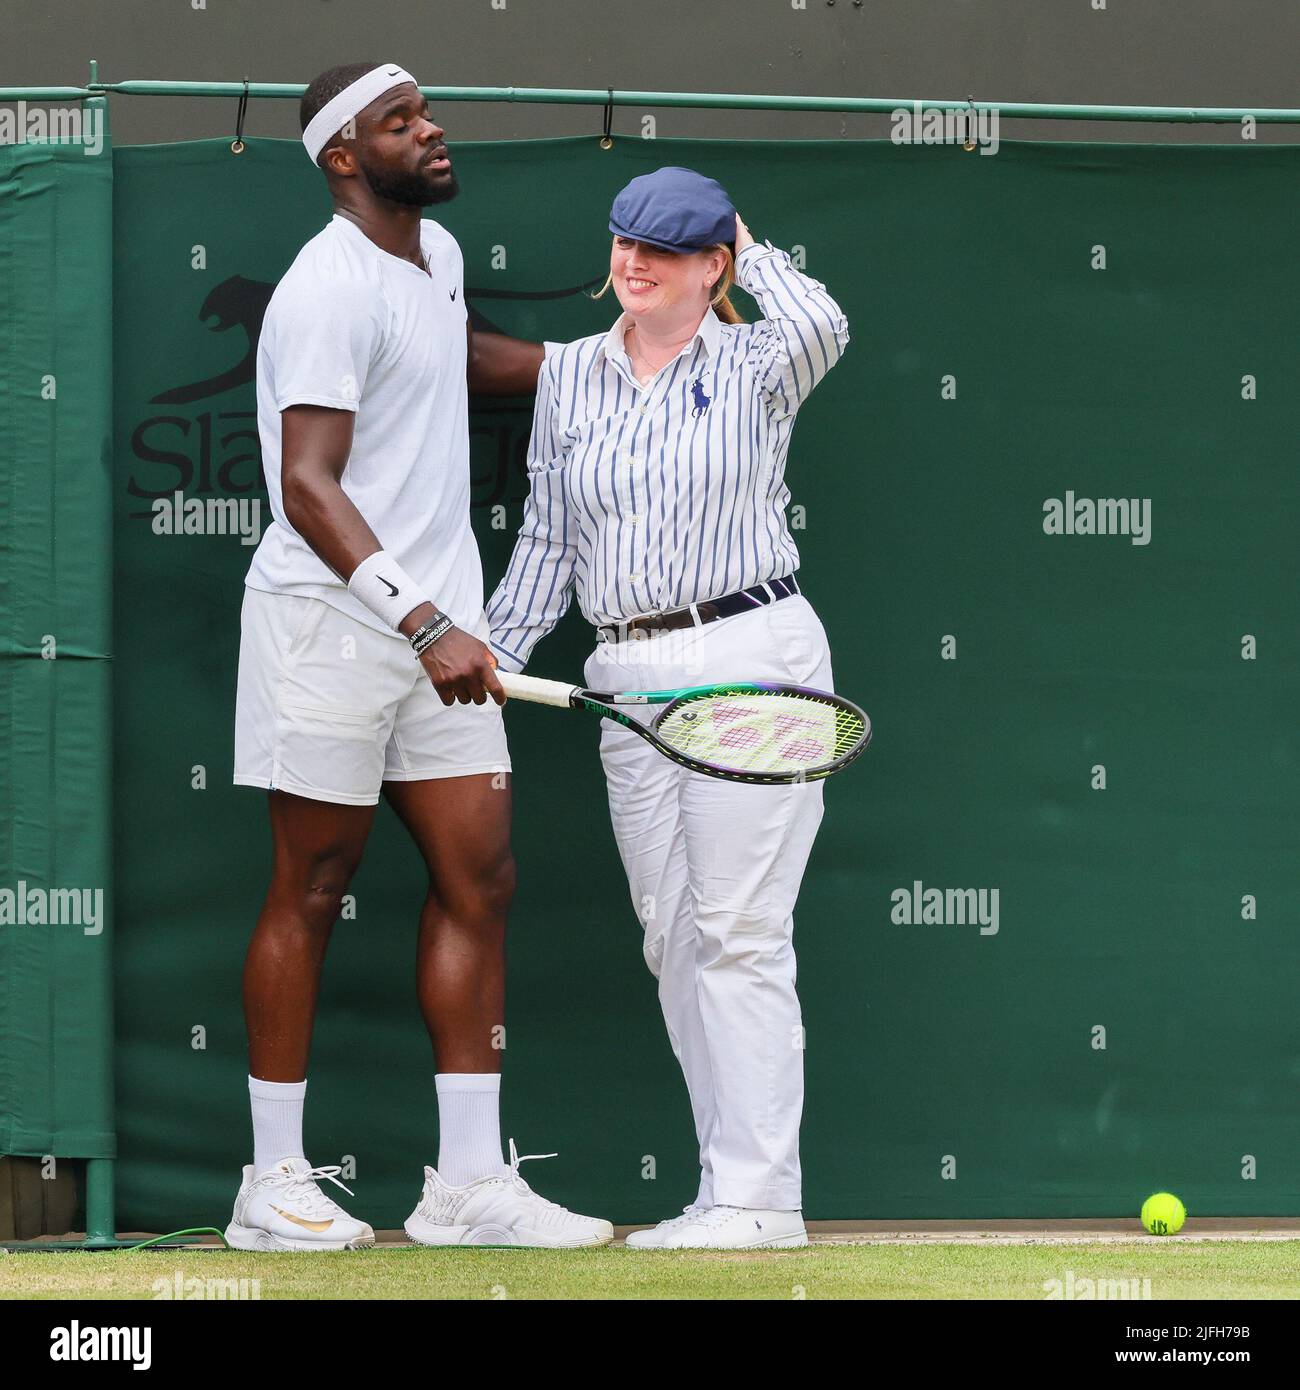 Wimbledon line judge hi-res stock photography and images